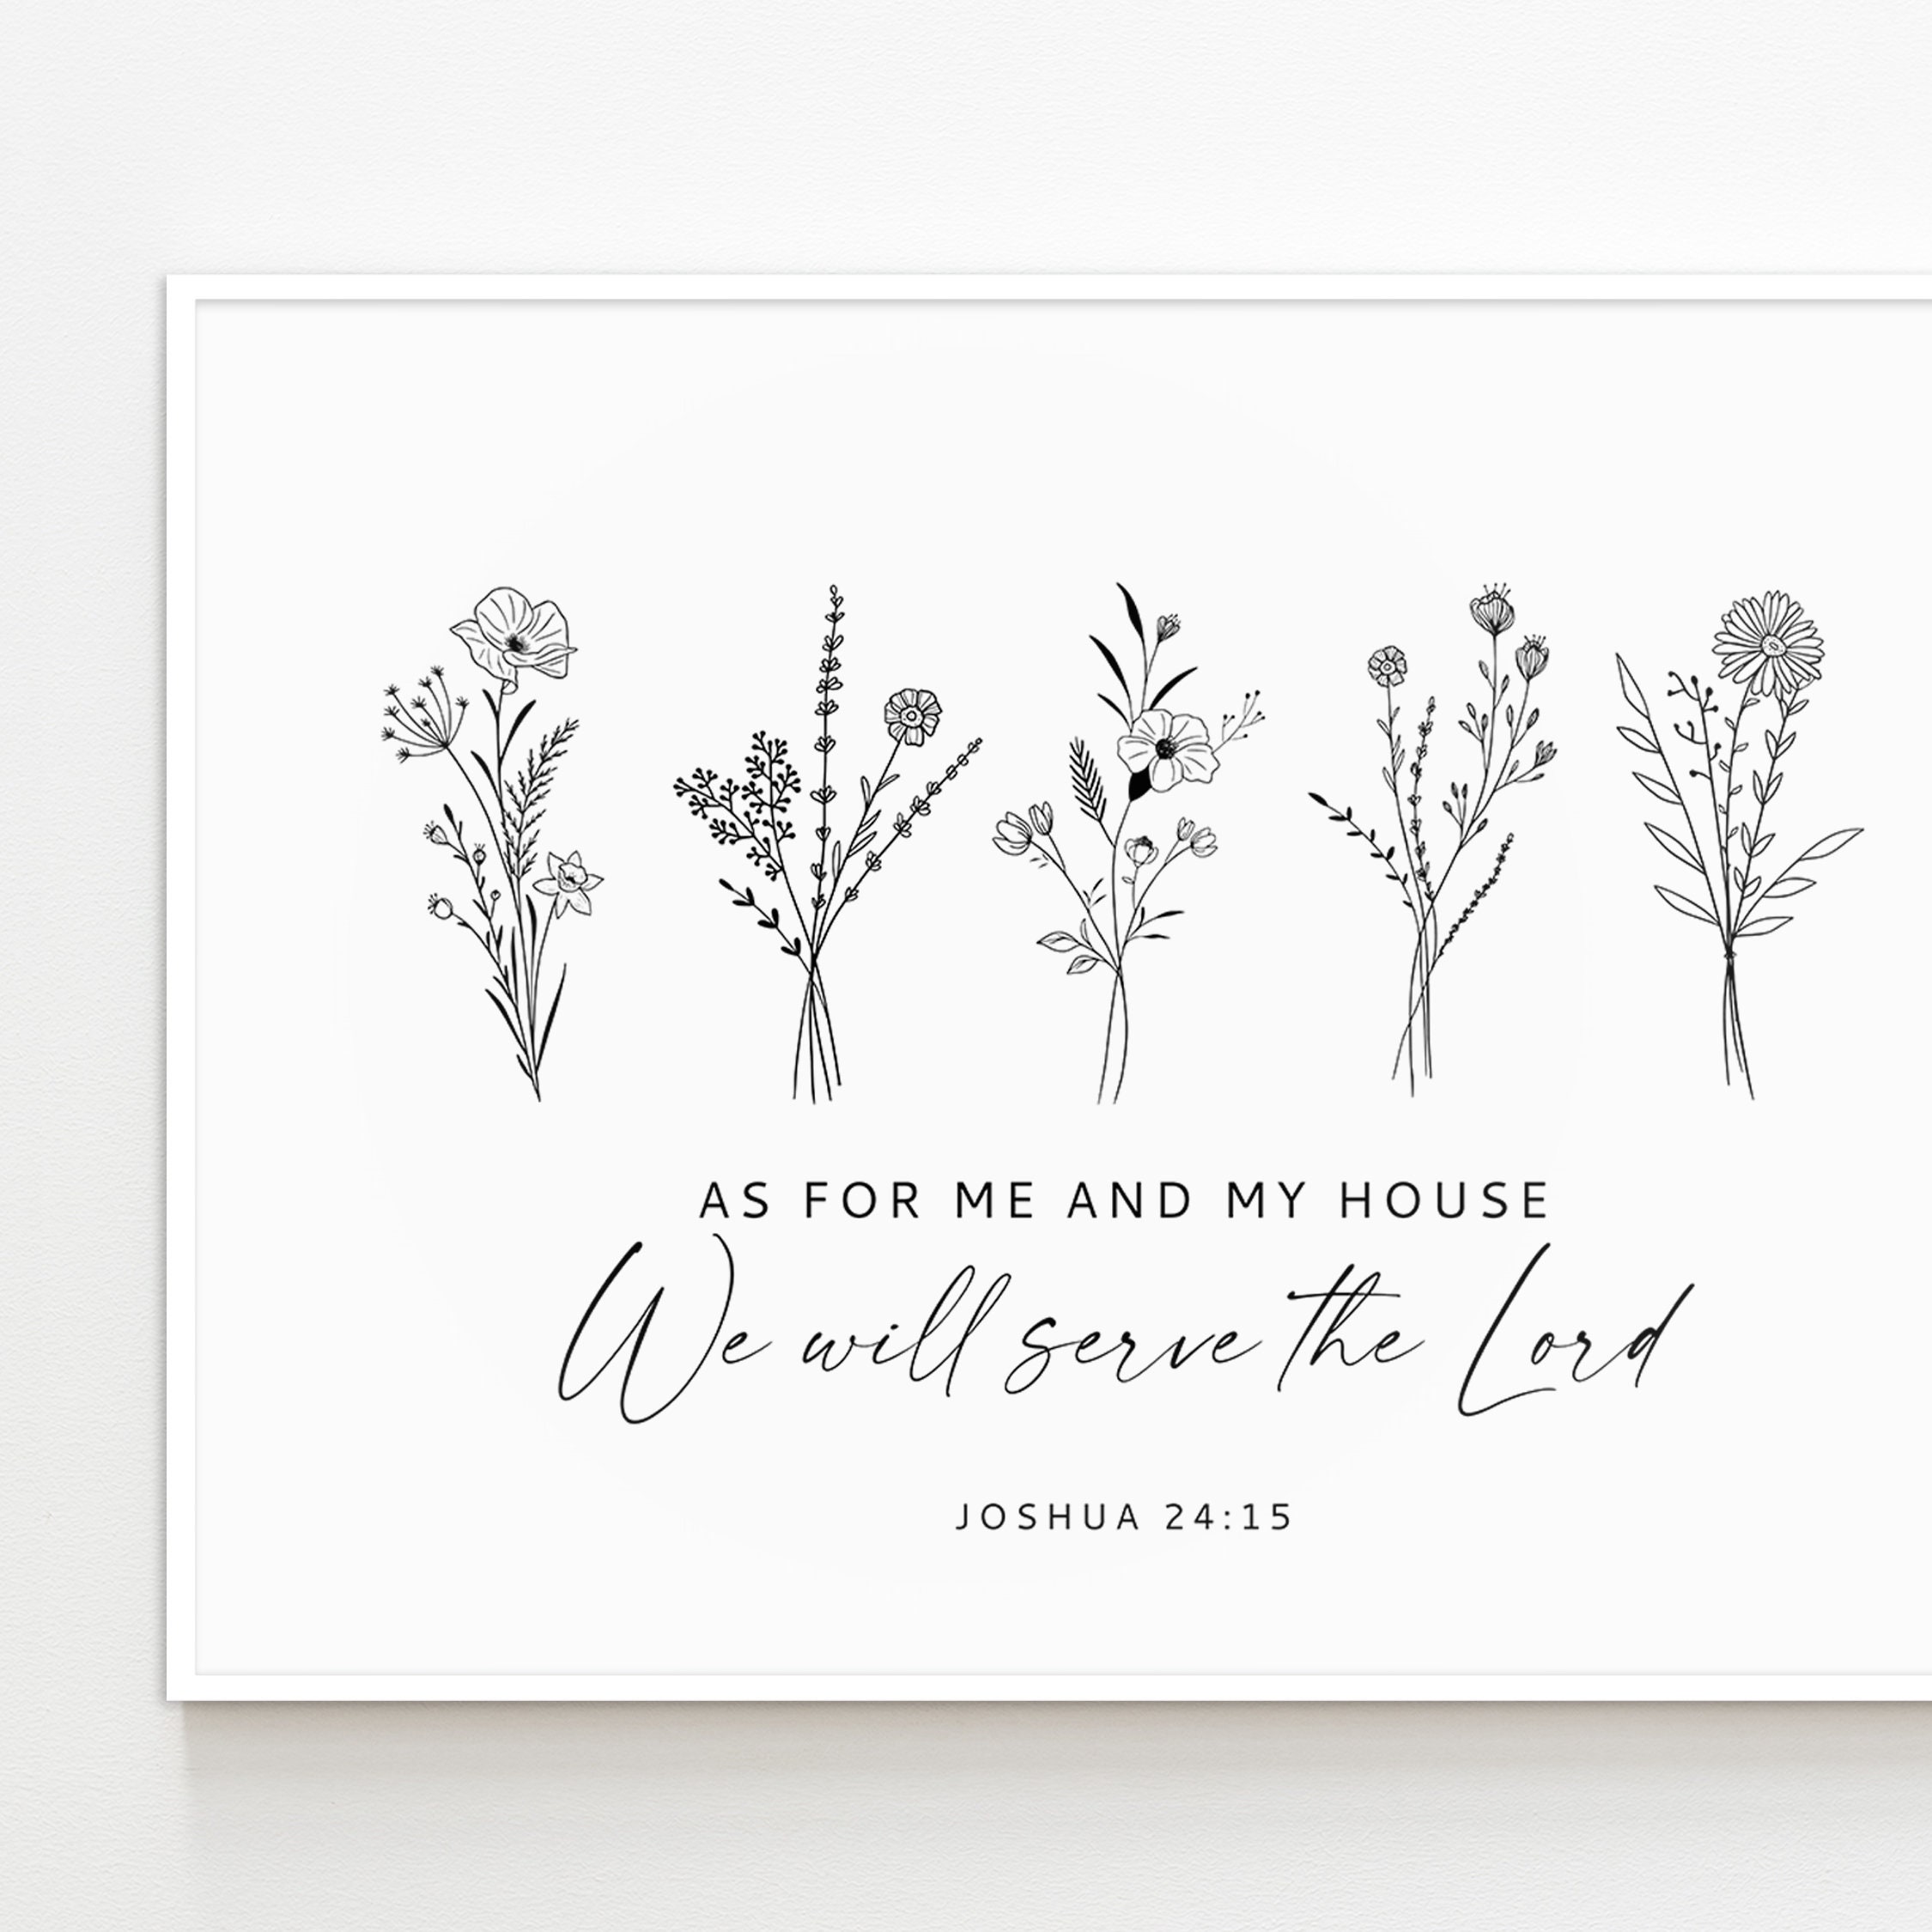 Joshua 24:15 Sunday School Craft - Free Printable